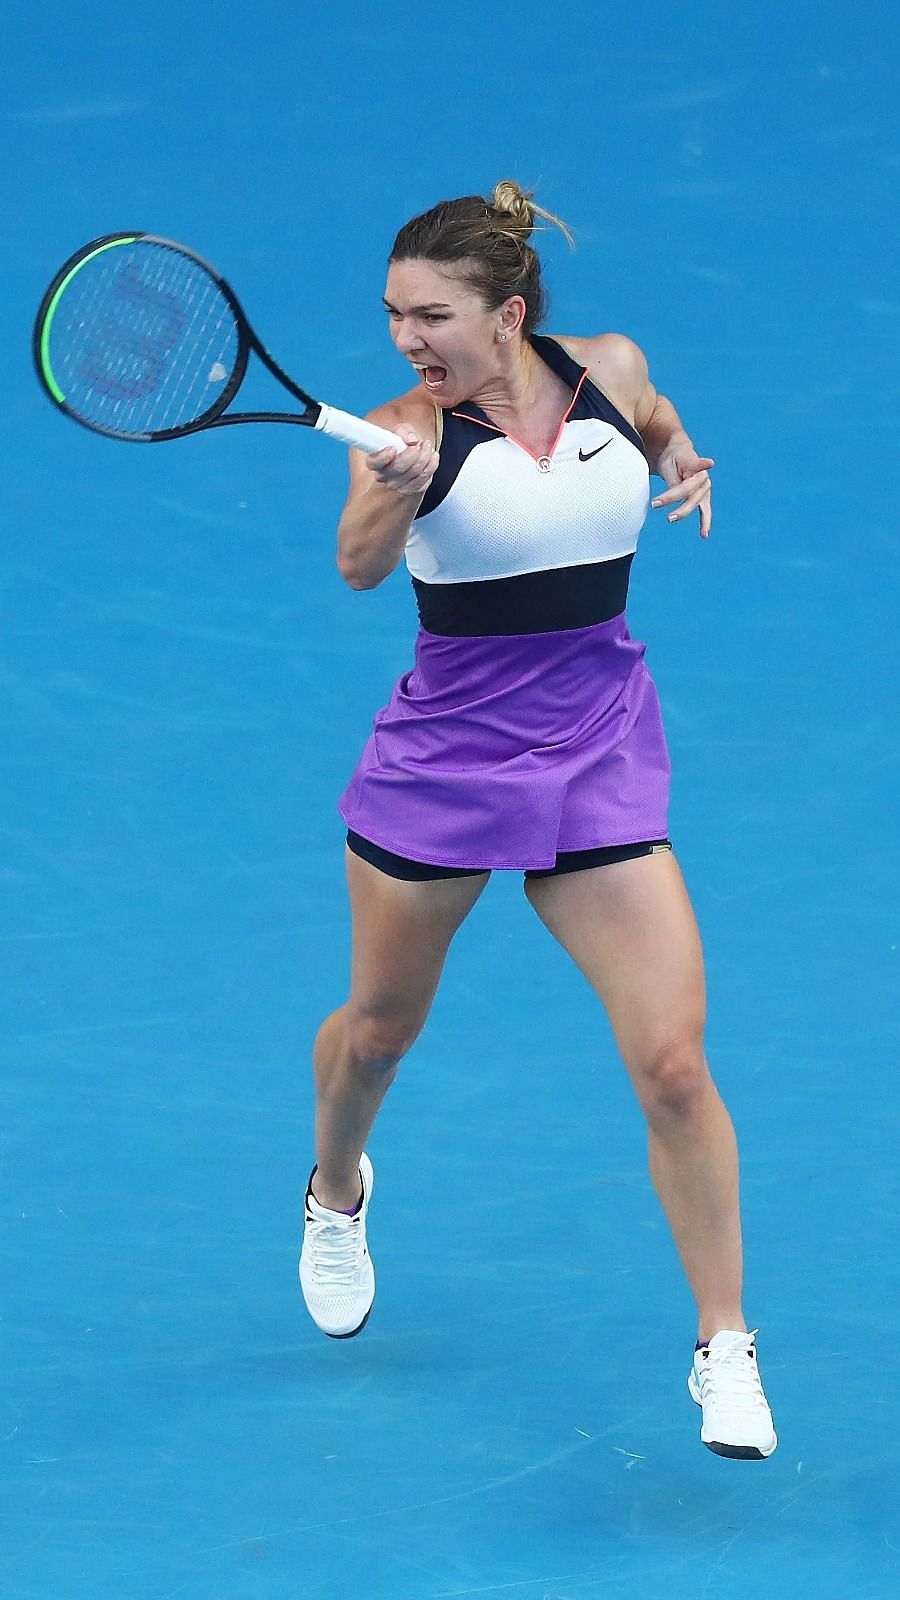 Australian Open 2021 Simona Halep vs Veronika Kudermetova preview, head-to-head and prediction